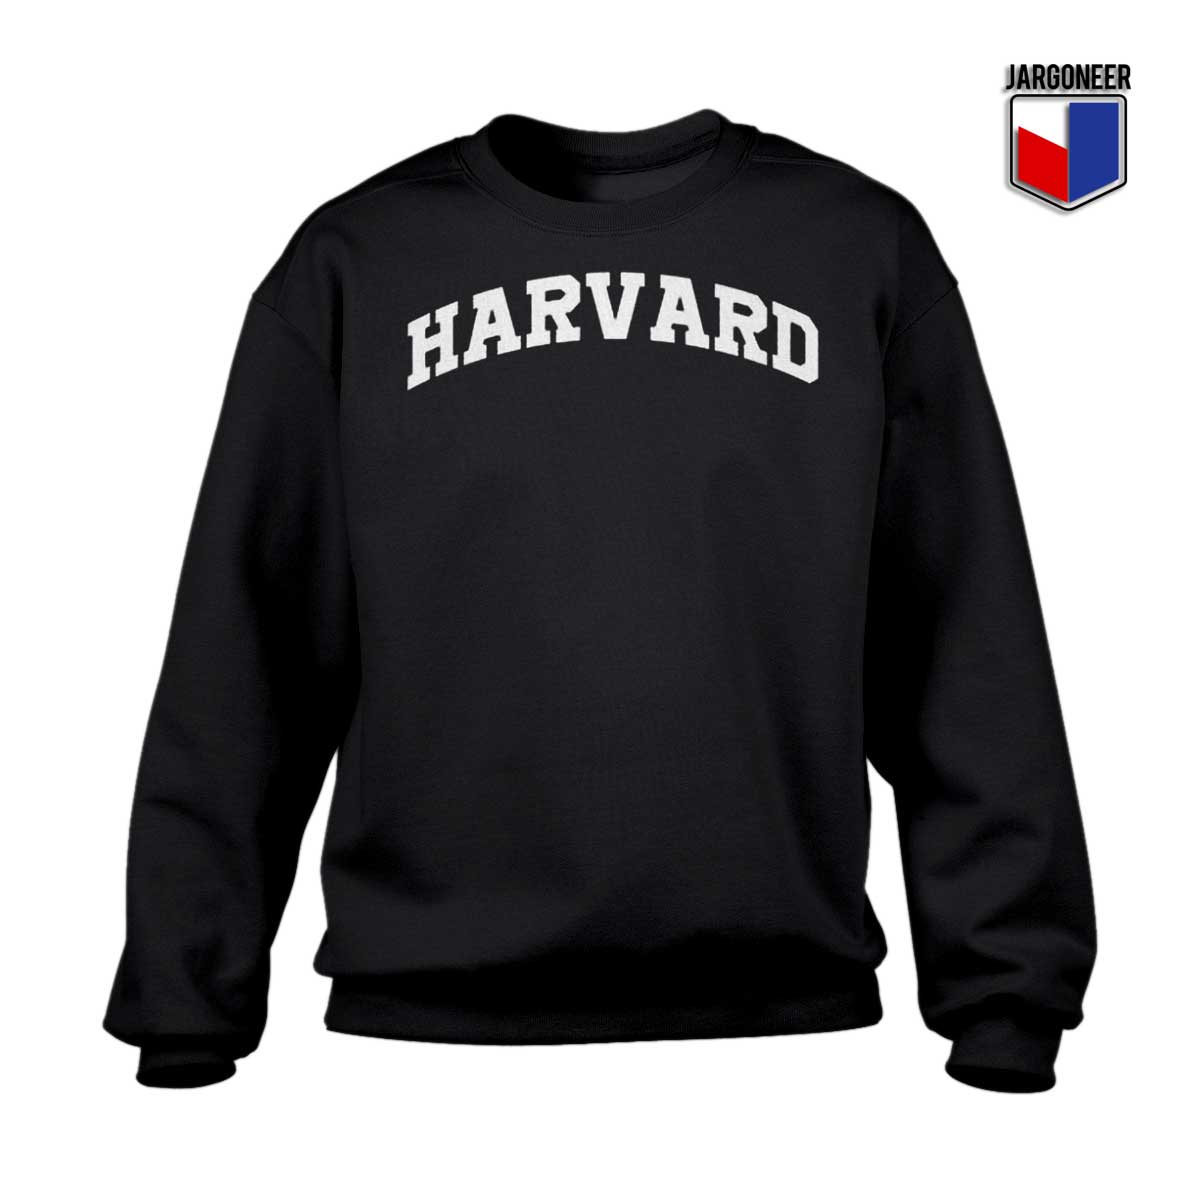 Harvard University Sweatshirt - Shop Unique Graphic Cool Shirt Designs